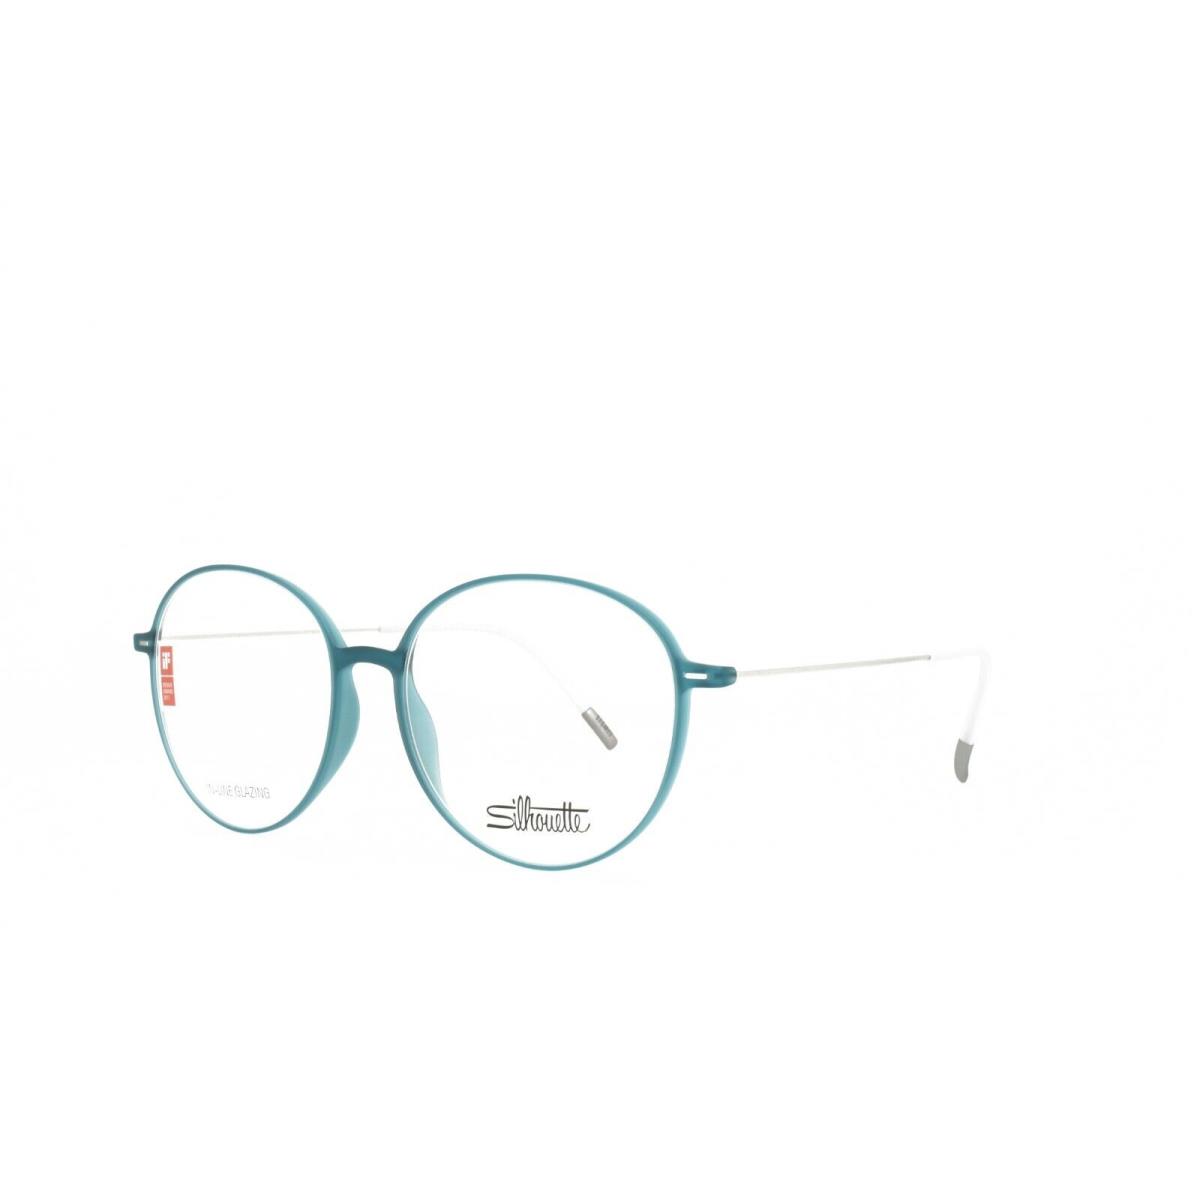 Silhouette Spx Urban Neo 1587 75 5000 Eyeglasses 51-16-140 Petrol - Frame: